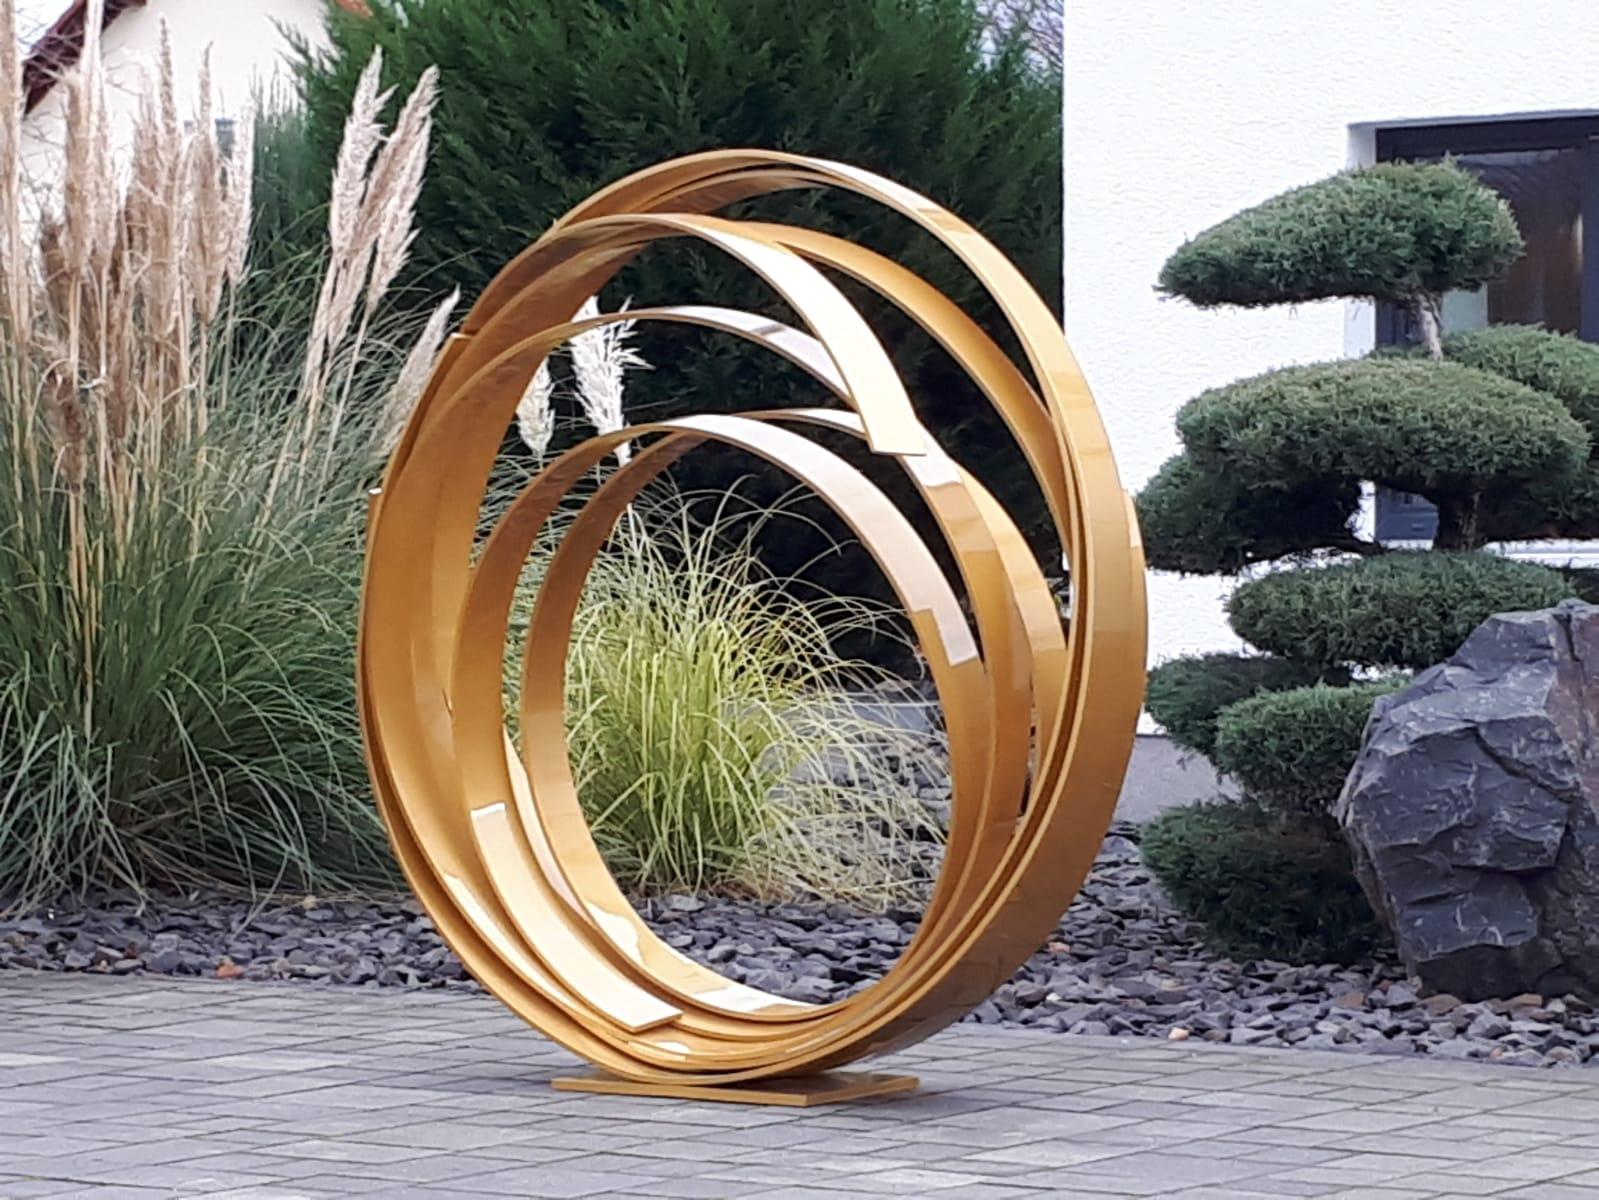 Kuno Vollet Abstract Sculpture - Golden Orbit Contemporary Aluminum  sculpture for Outdoors